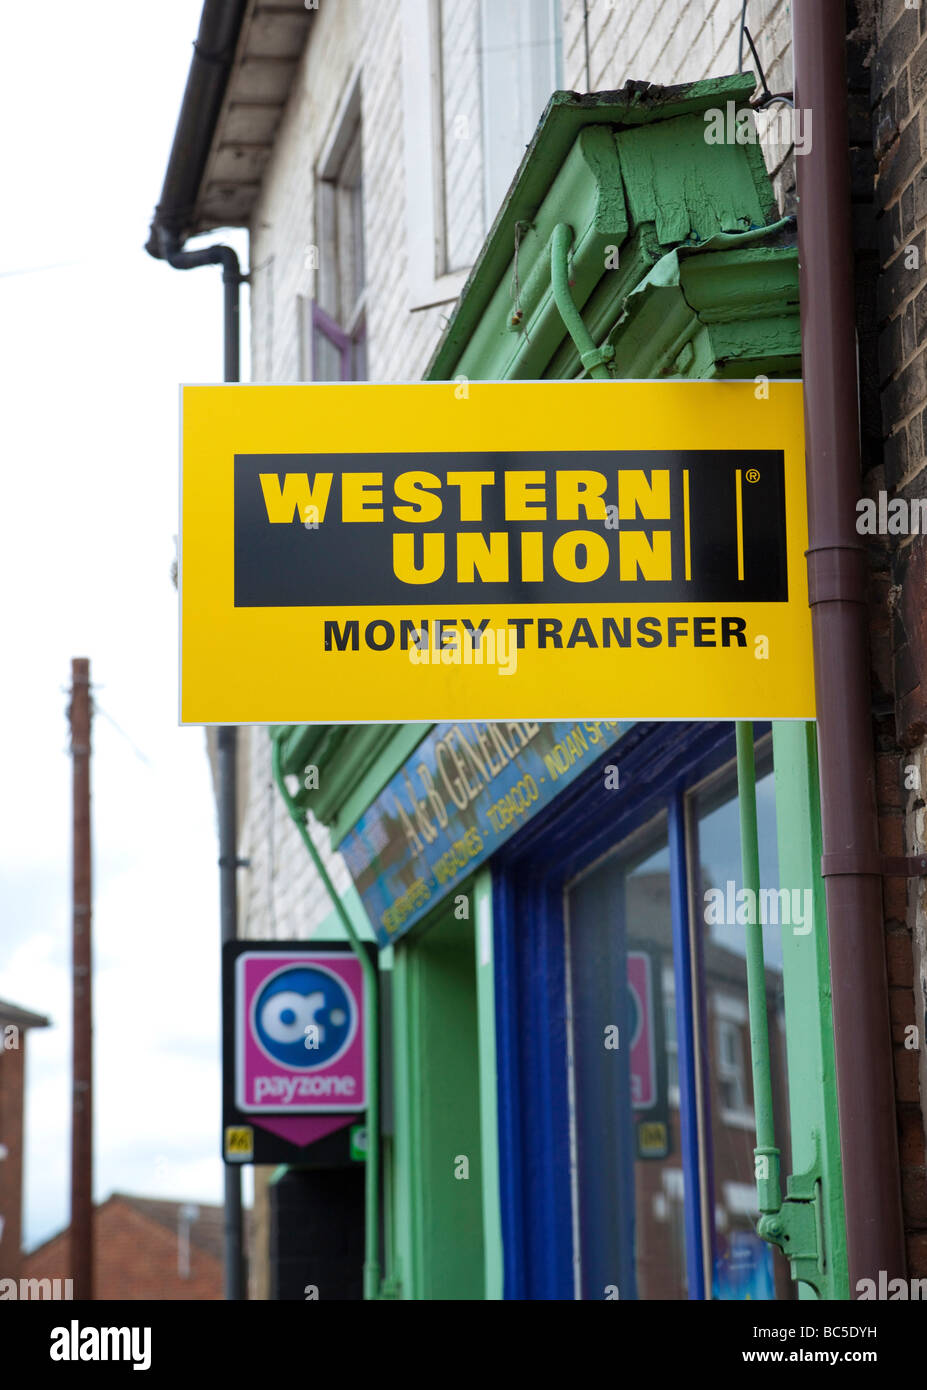 Western Union sign Stock Photo